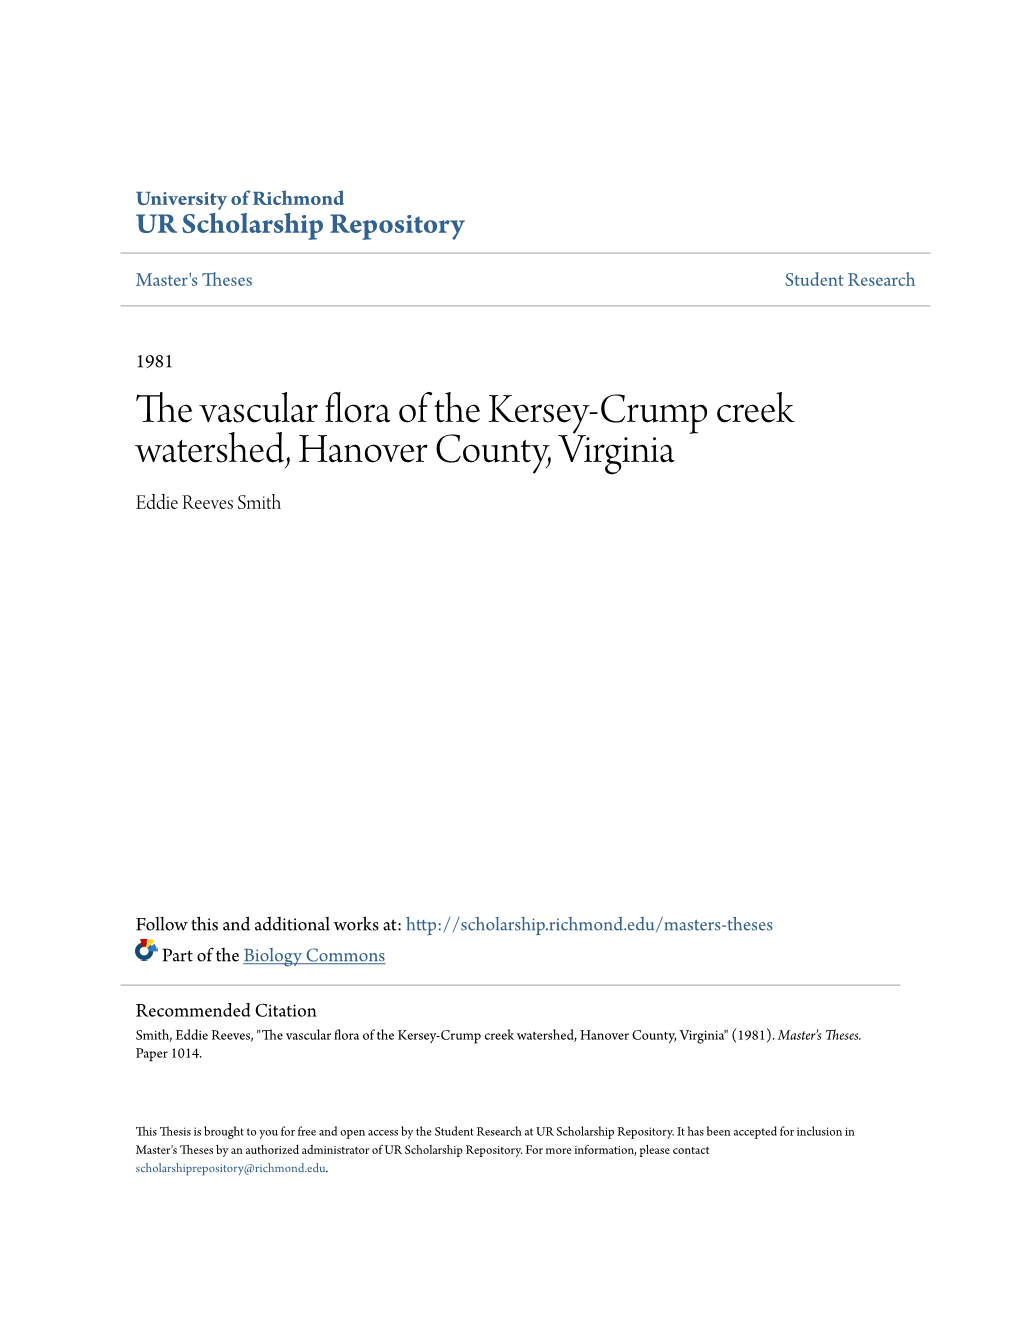 The Vascular Flora of the Kersey-Crump Creek Watershed, Hanover County, Virginia Eddie Reeves Smith